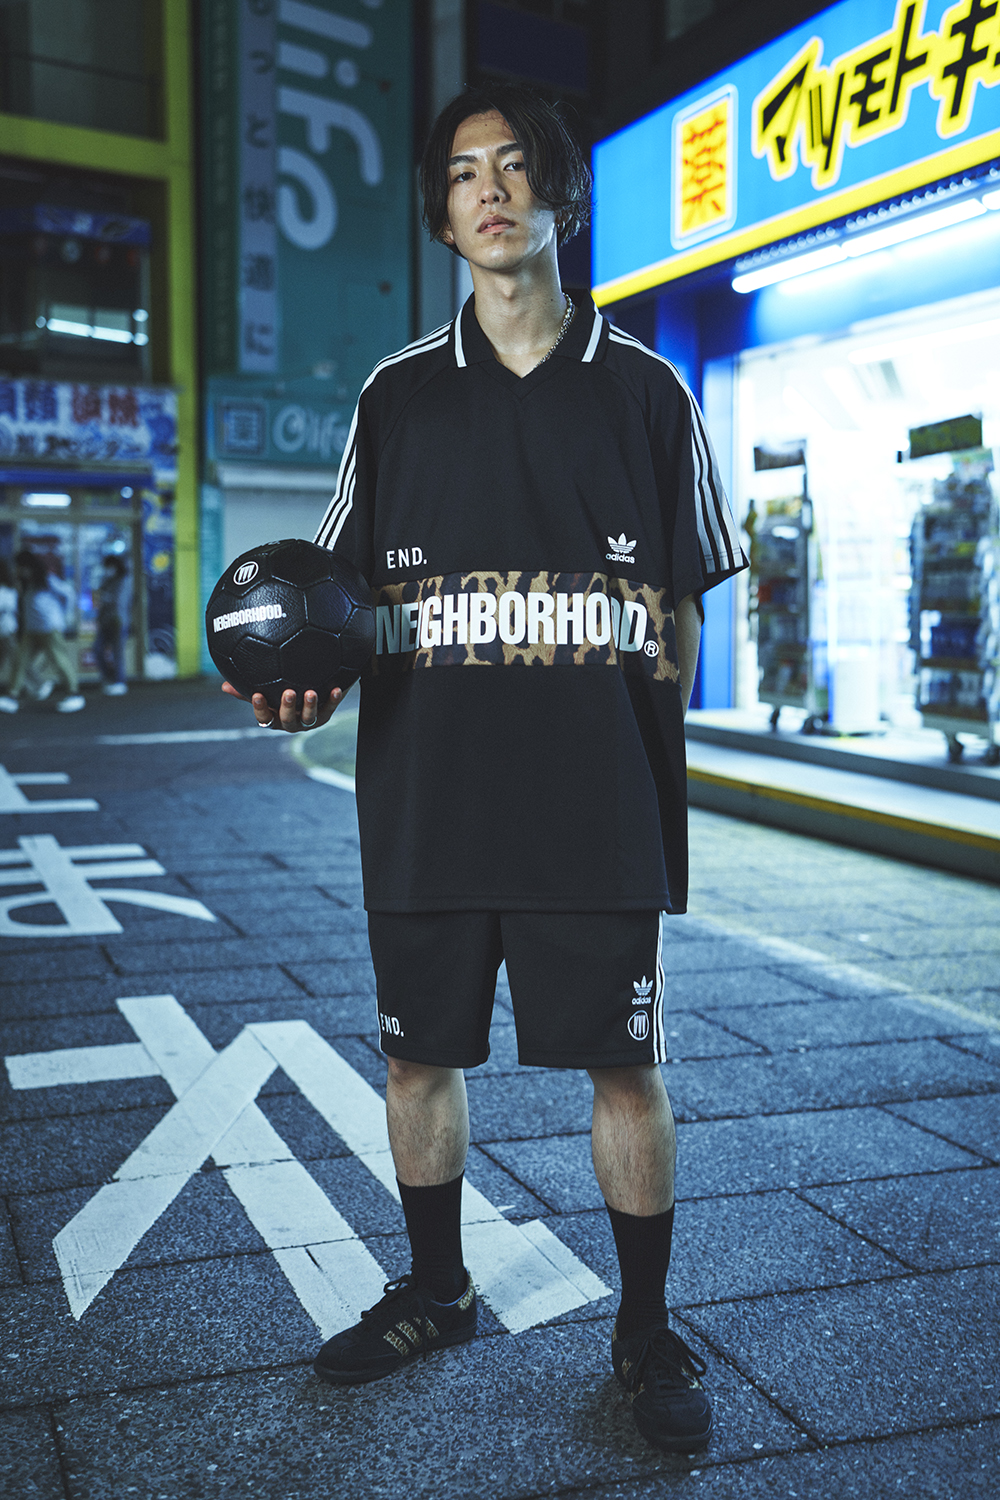 END. (US) x adidas x NEIGHBORHOOD Present: Tokyo Freestyle by Team